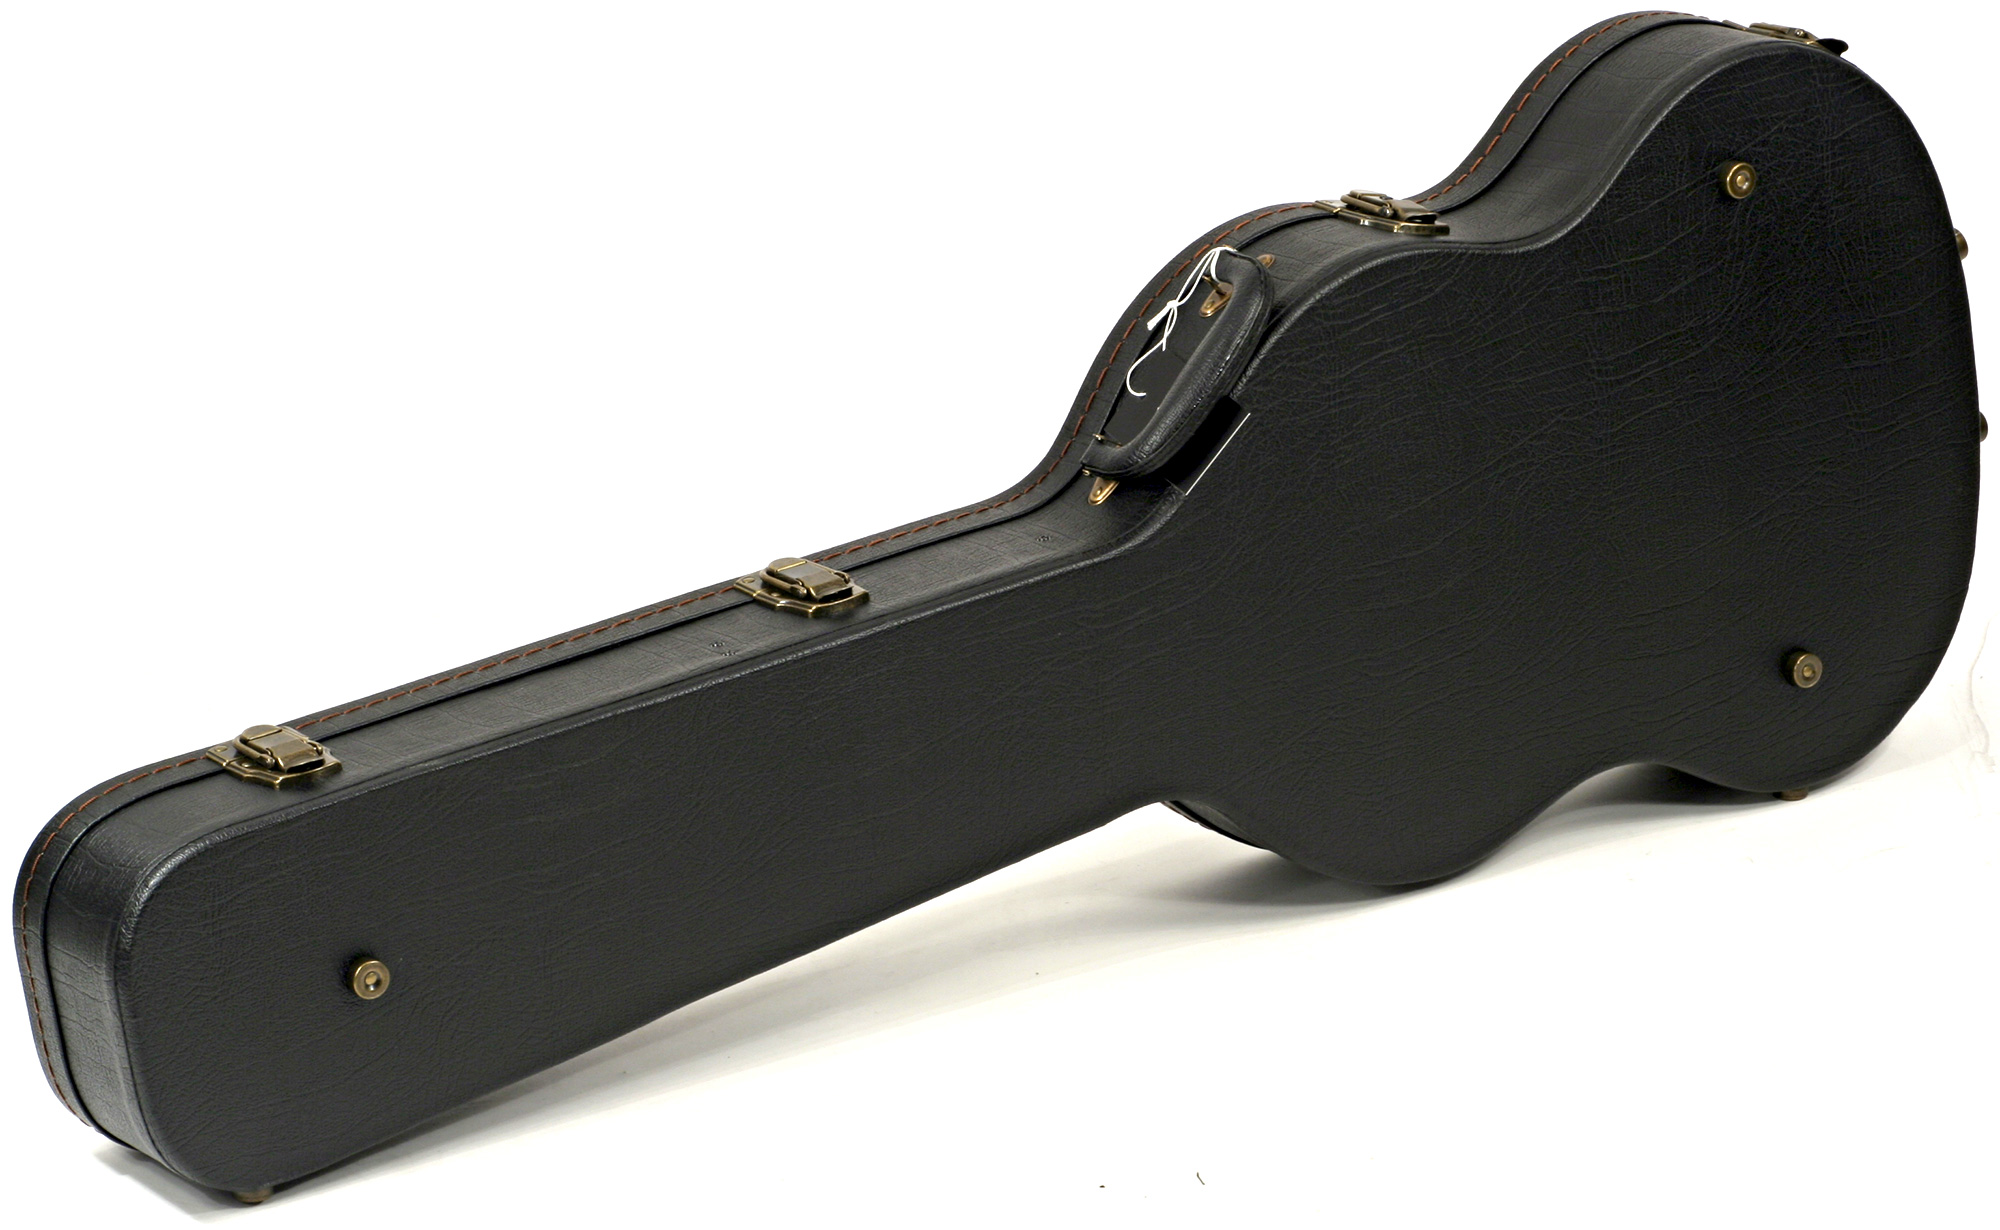 X-tone 1553 Deluxe Electrique Sg En Forme Black - Electric guitar case - Variation 1